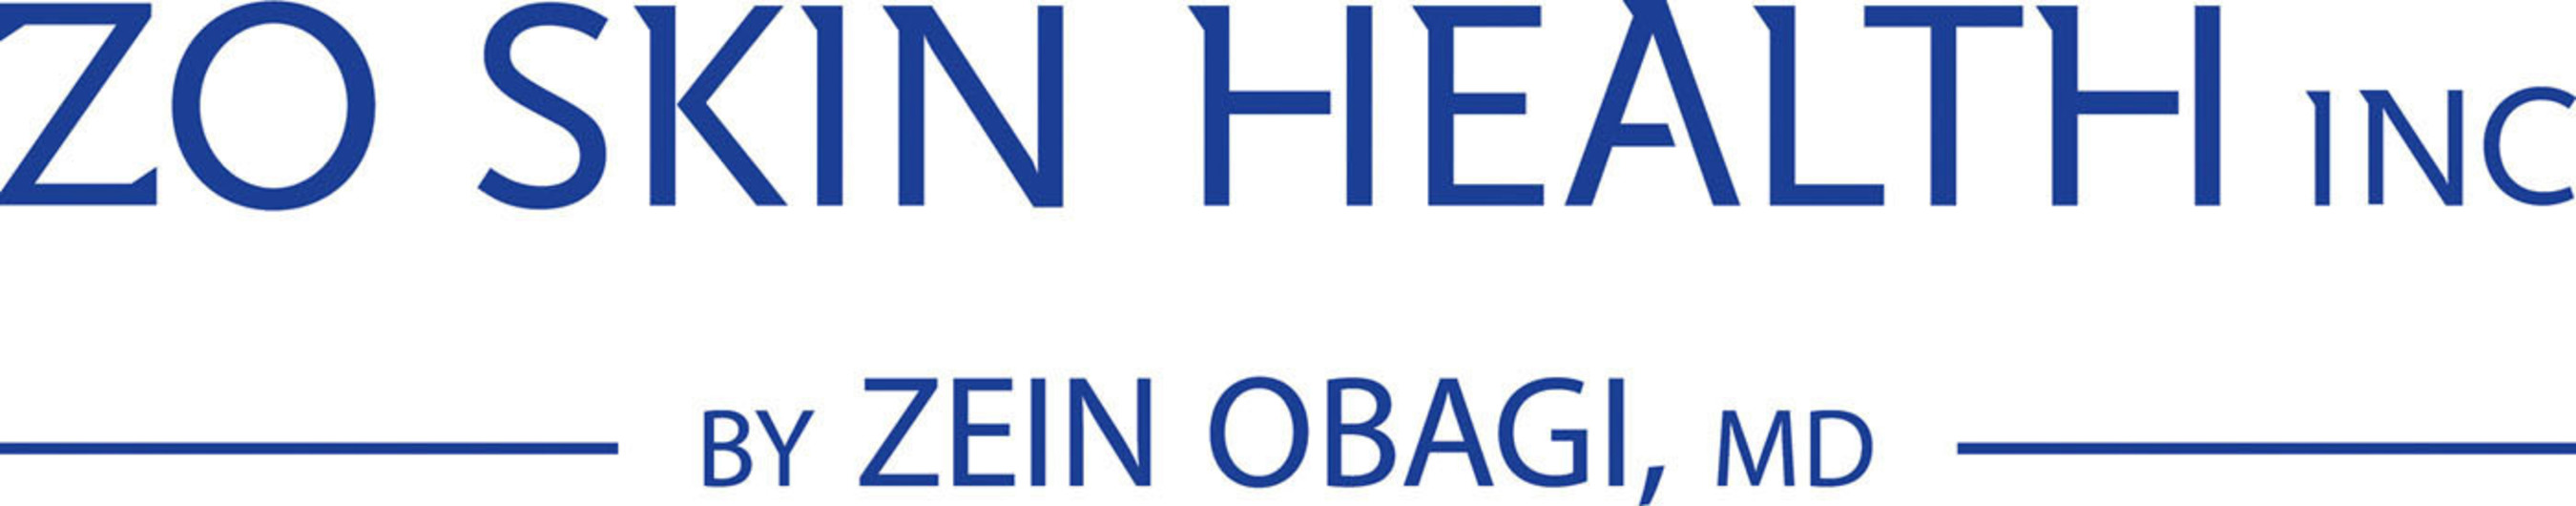 ZO Skin Health logo.